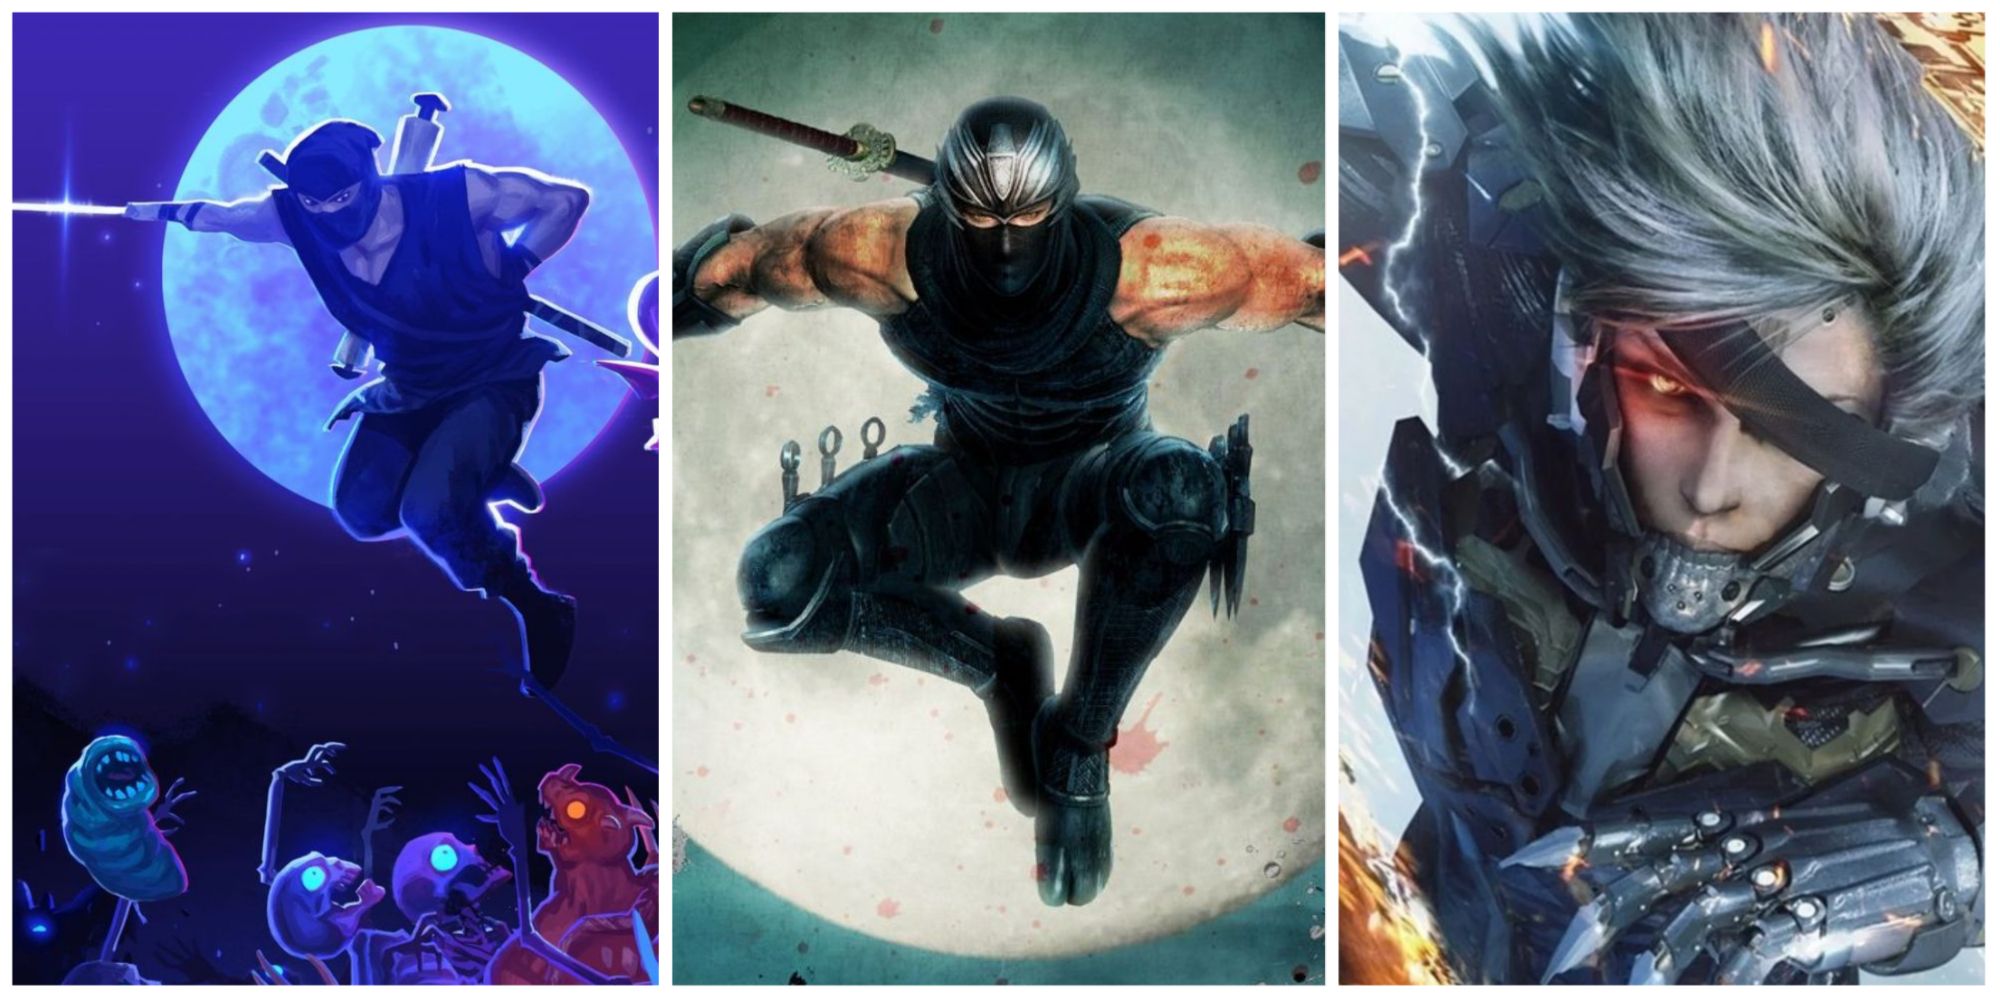 Games Like Ninja Gaiden Split Image Of Characters